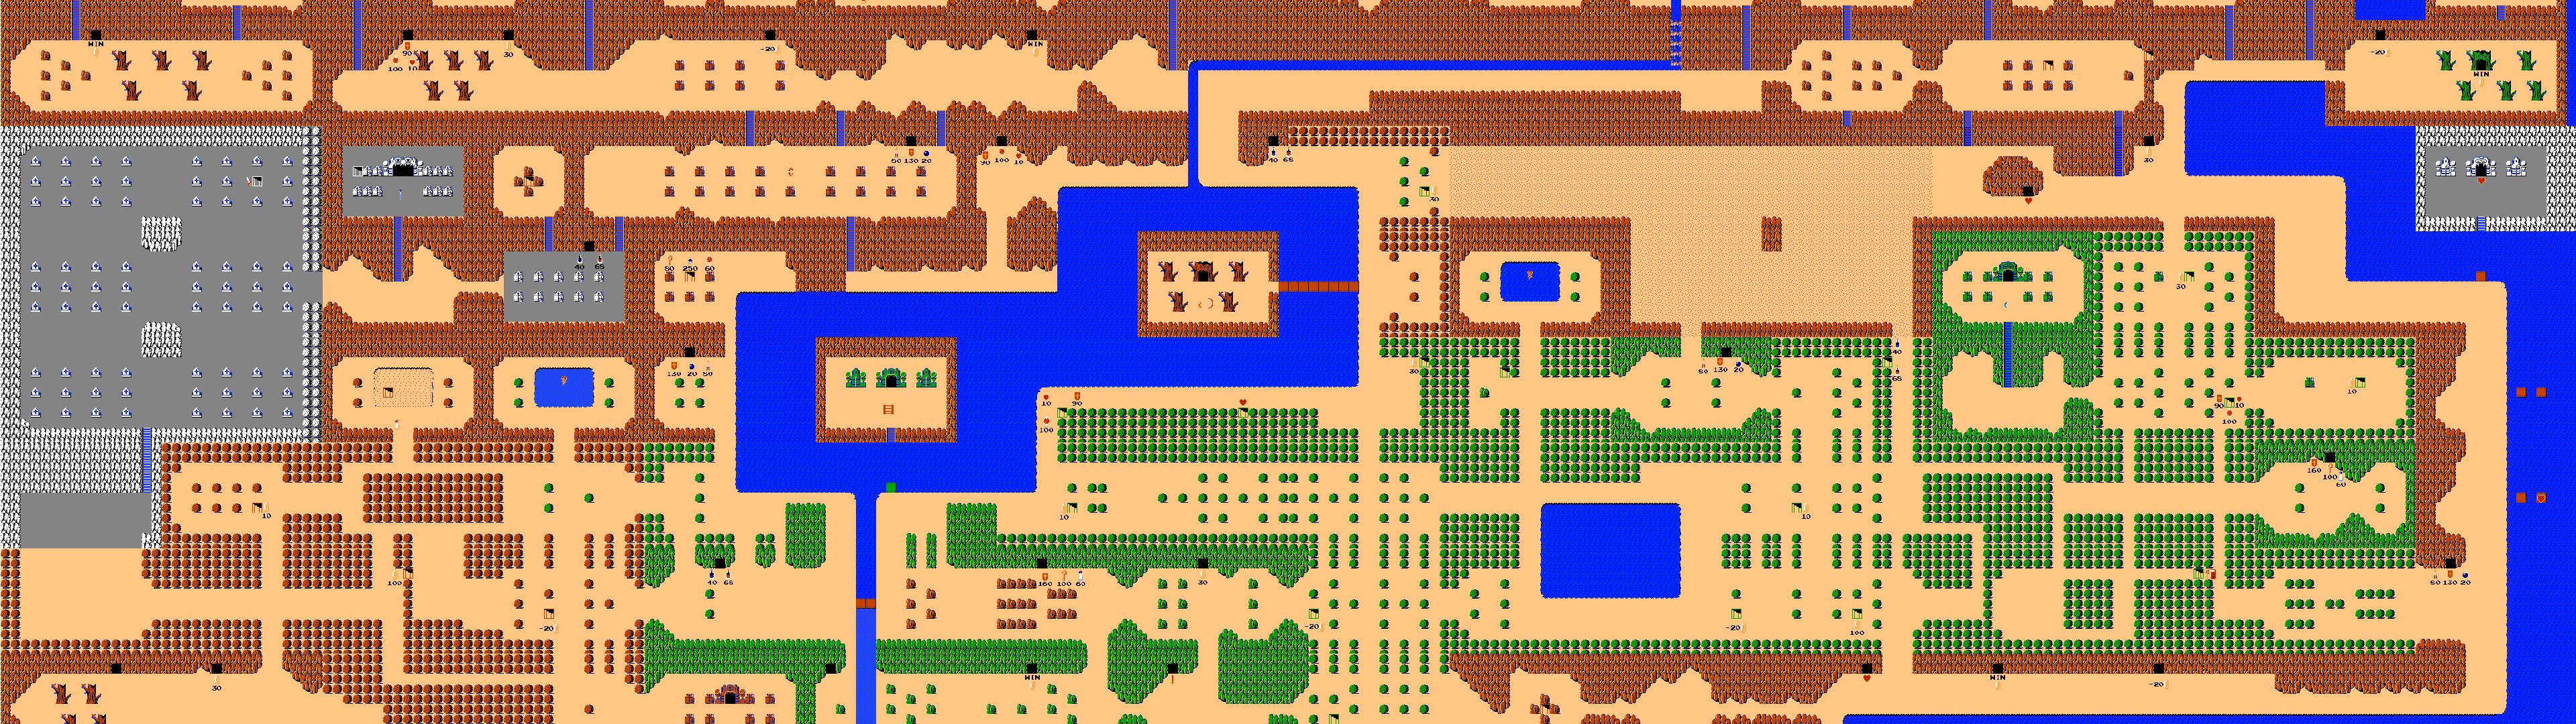 Legend Of Zelda Dual Monitor Screen Multi Multiple Game Jeu Snes Map